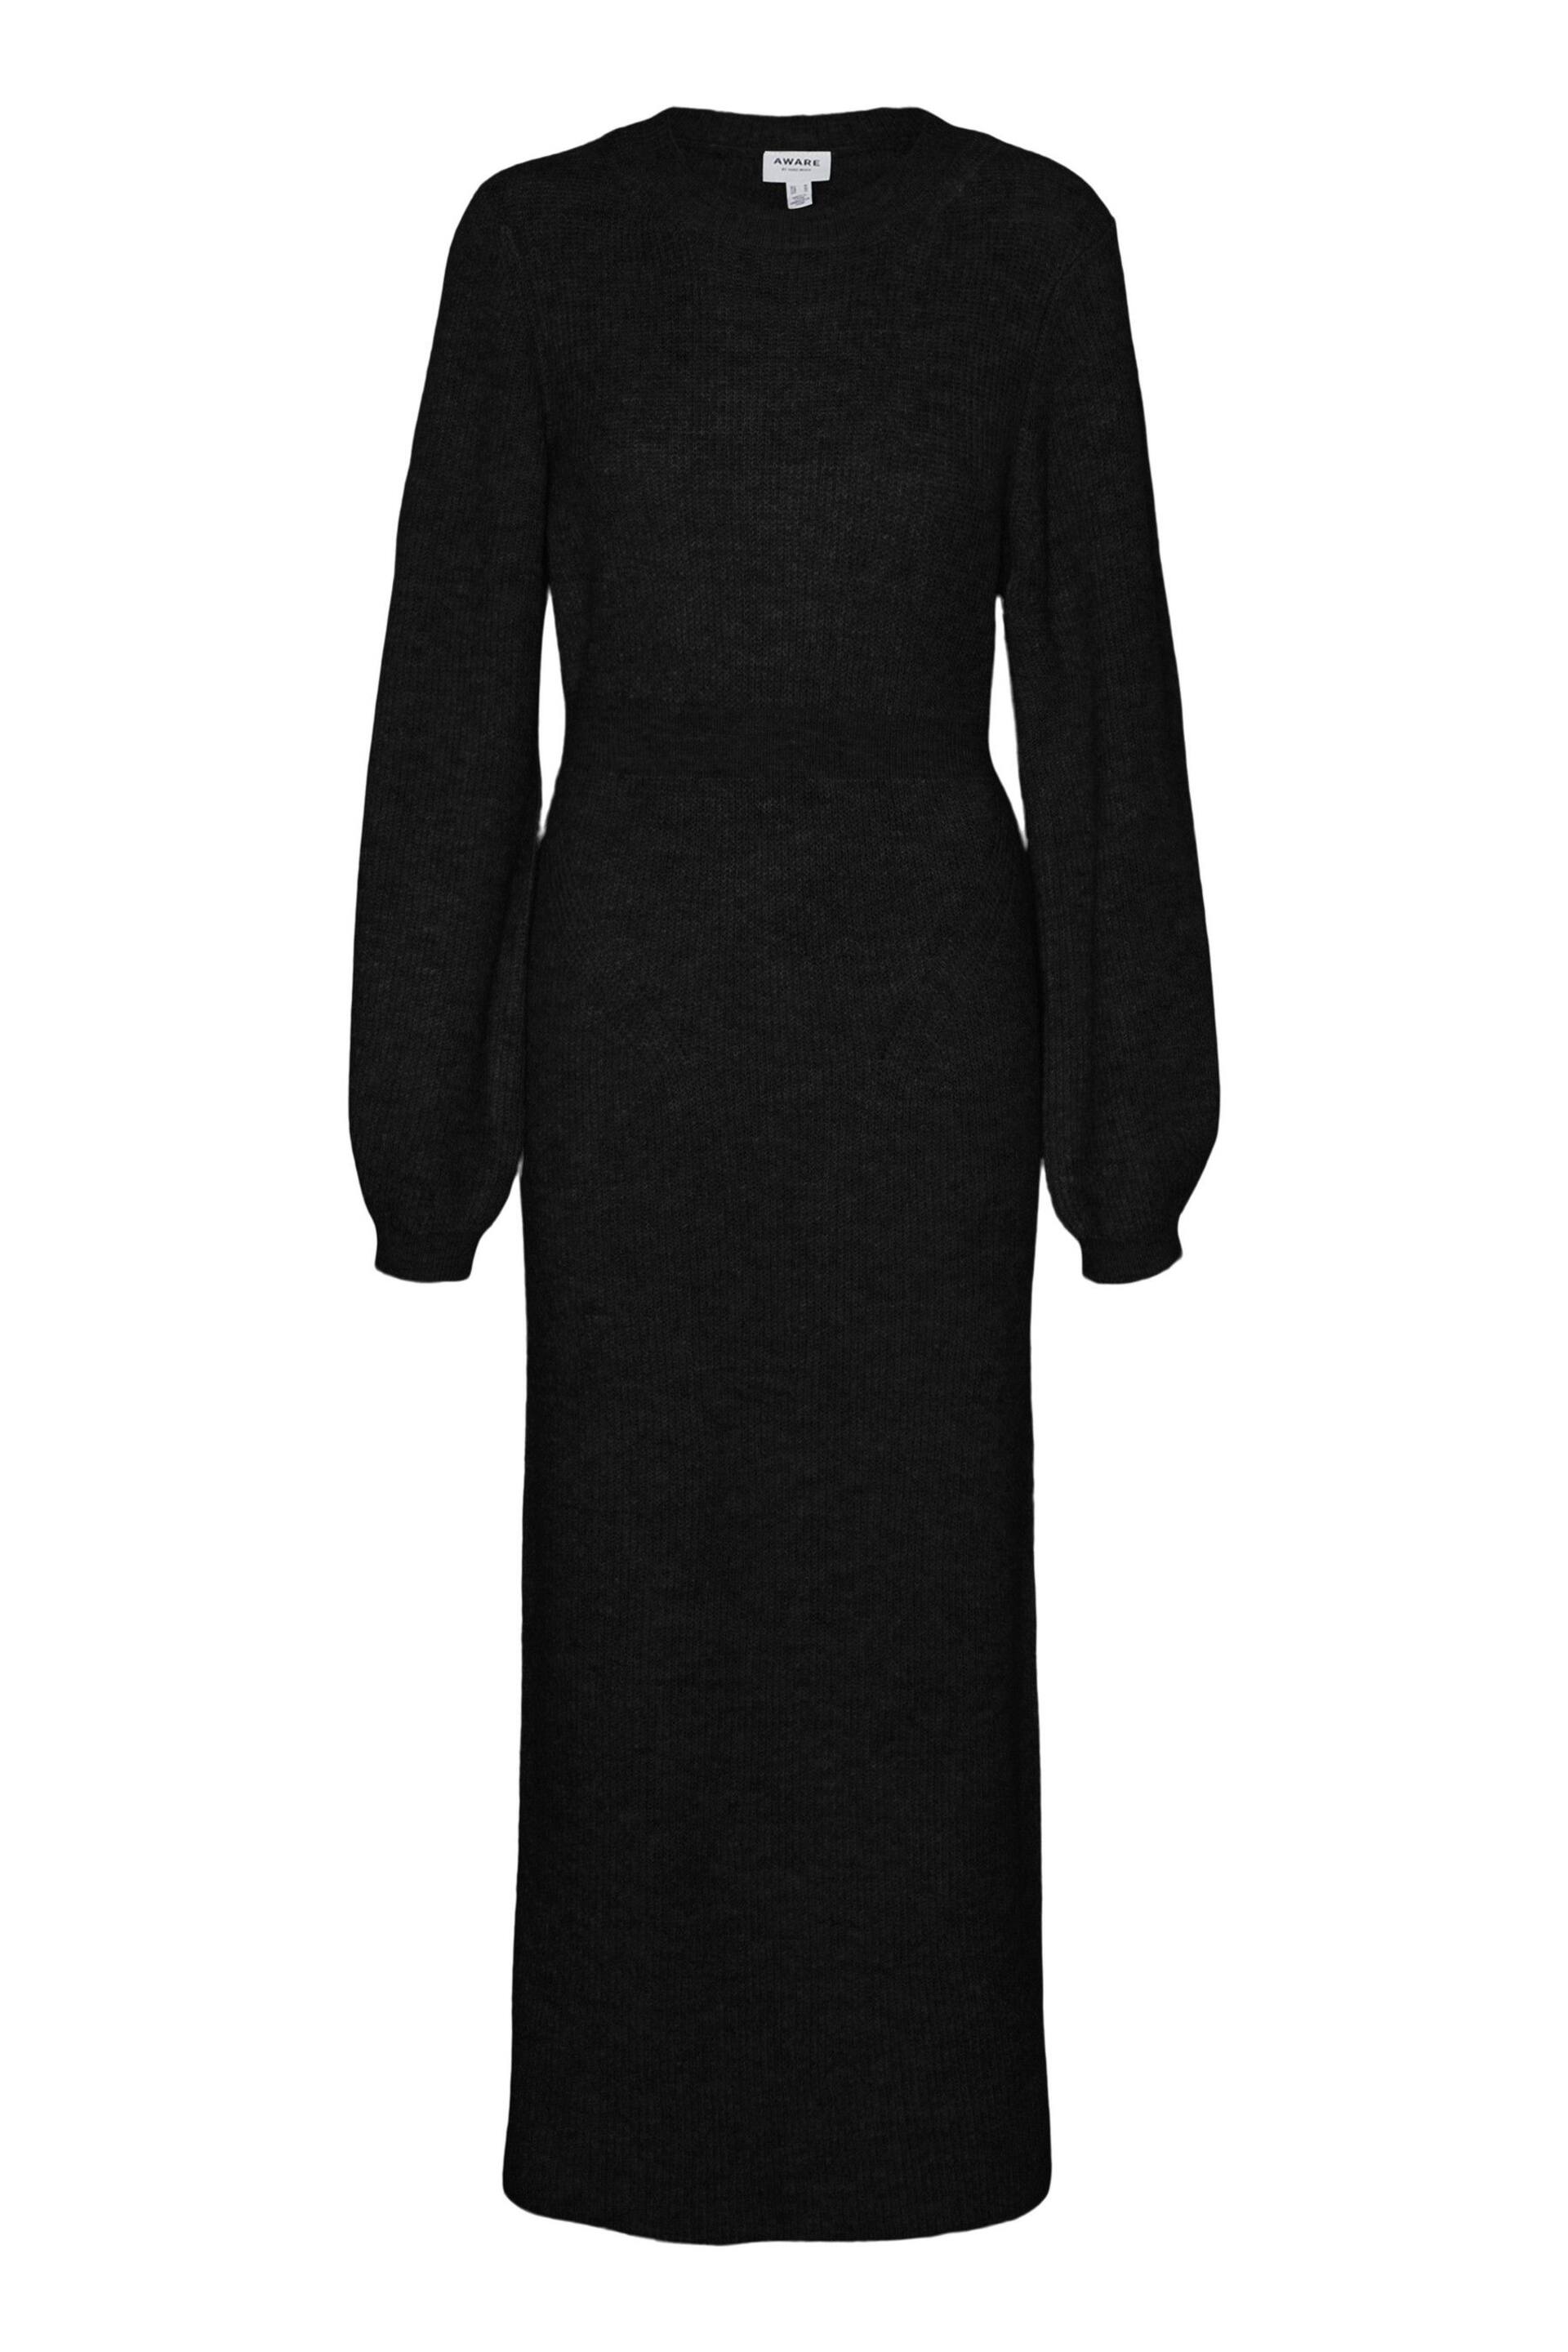 VERO MODA Black Waisted Long Sleeve Midi Knitted Jumper Dress - Image 5 of 5